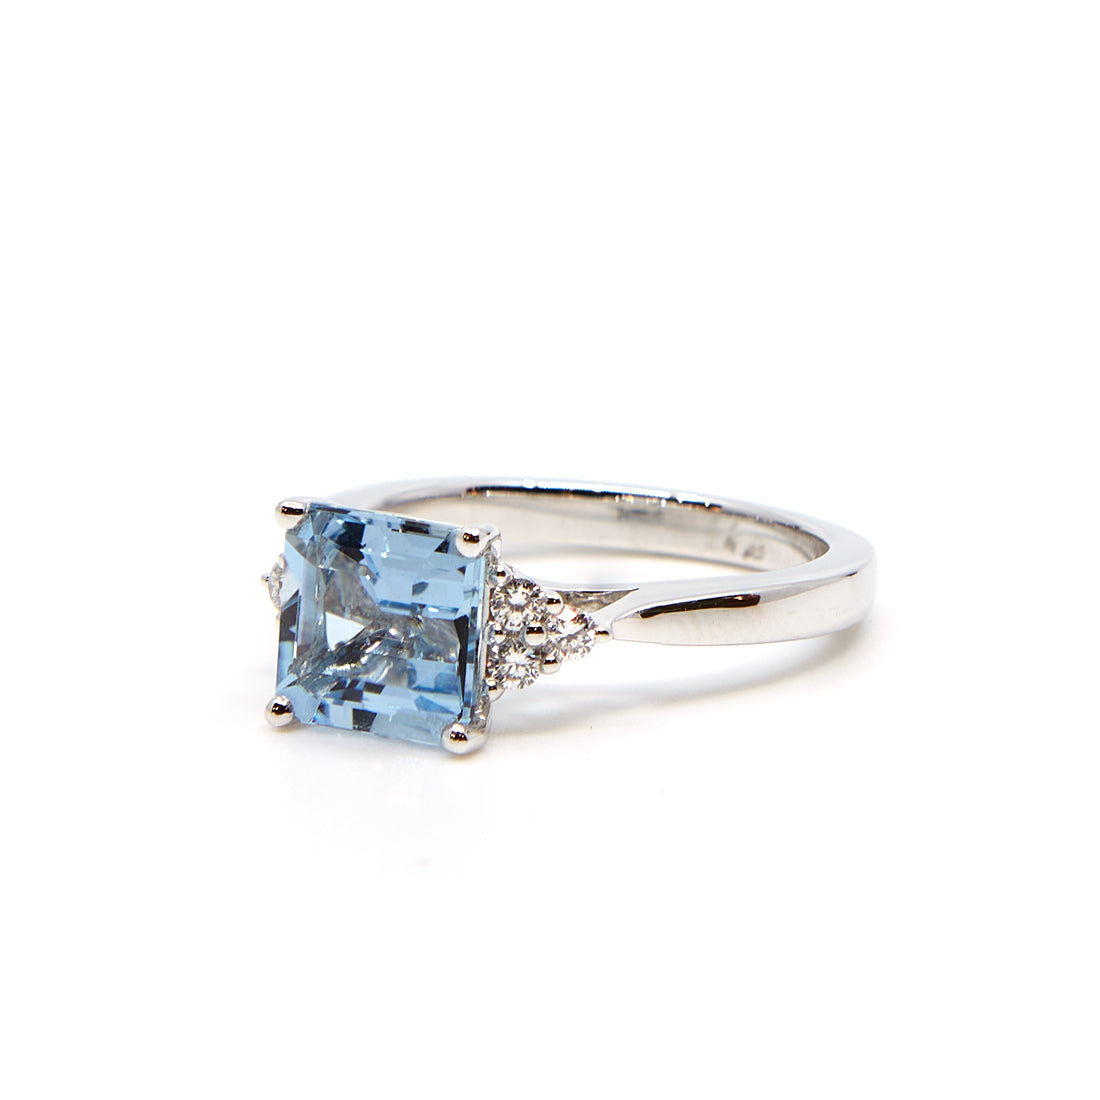 White gold ring with aquamarine and diamond